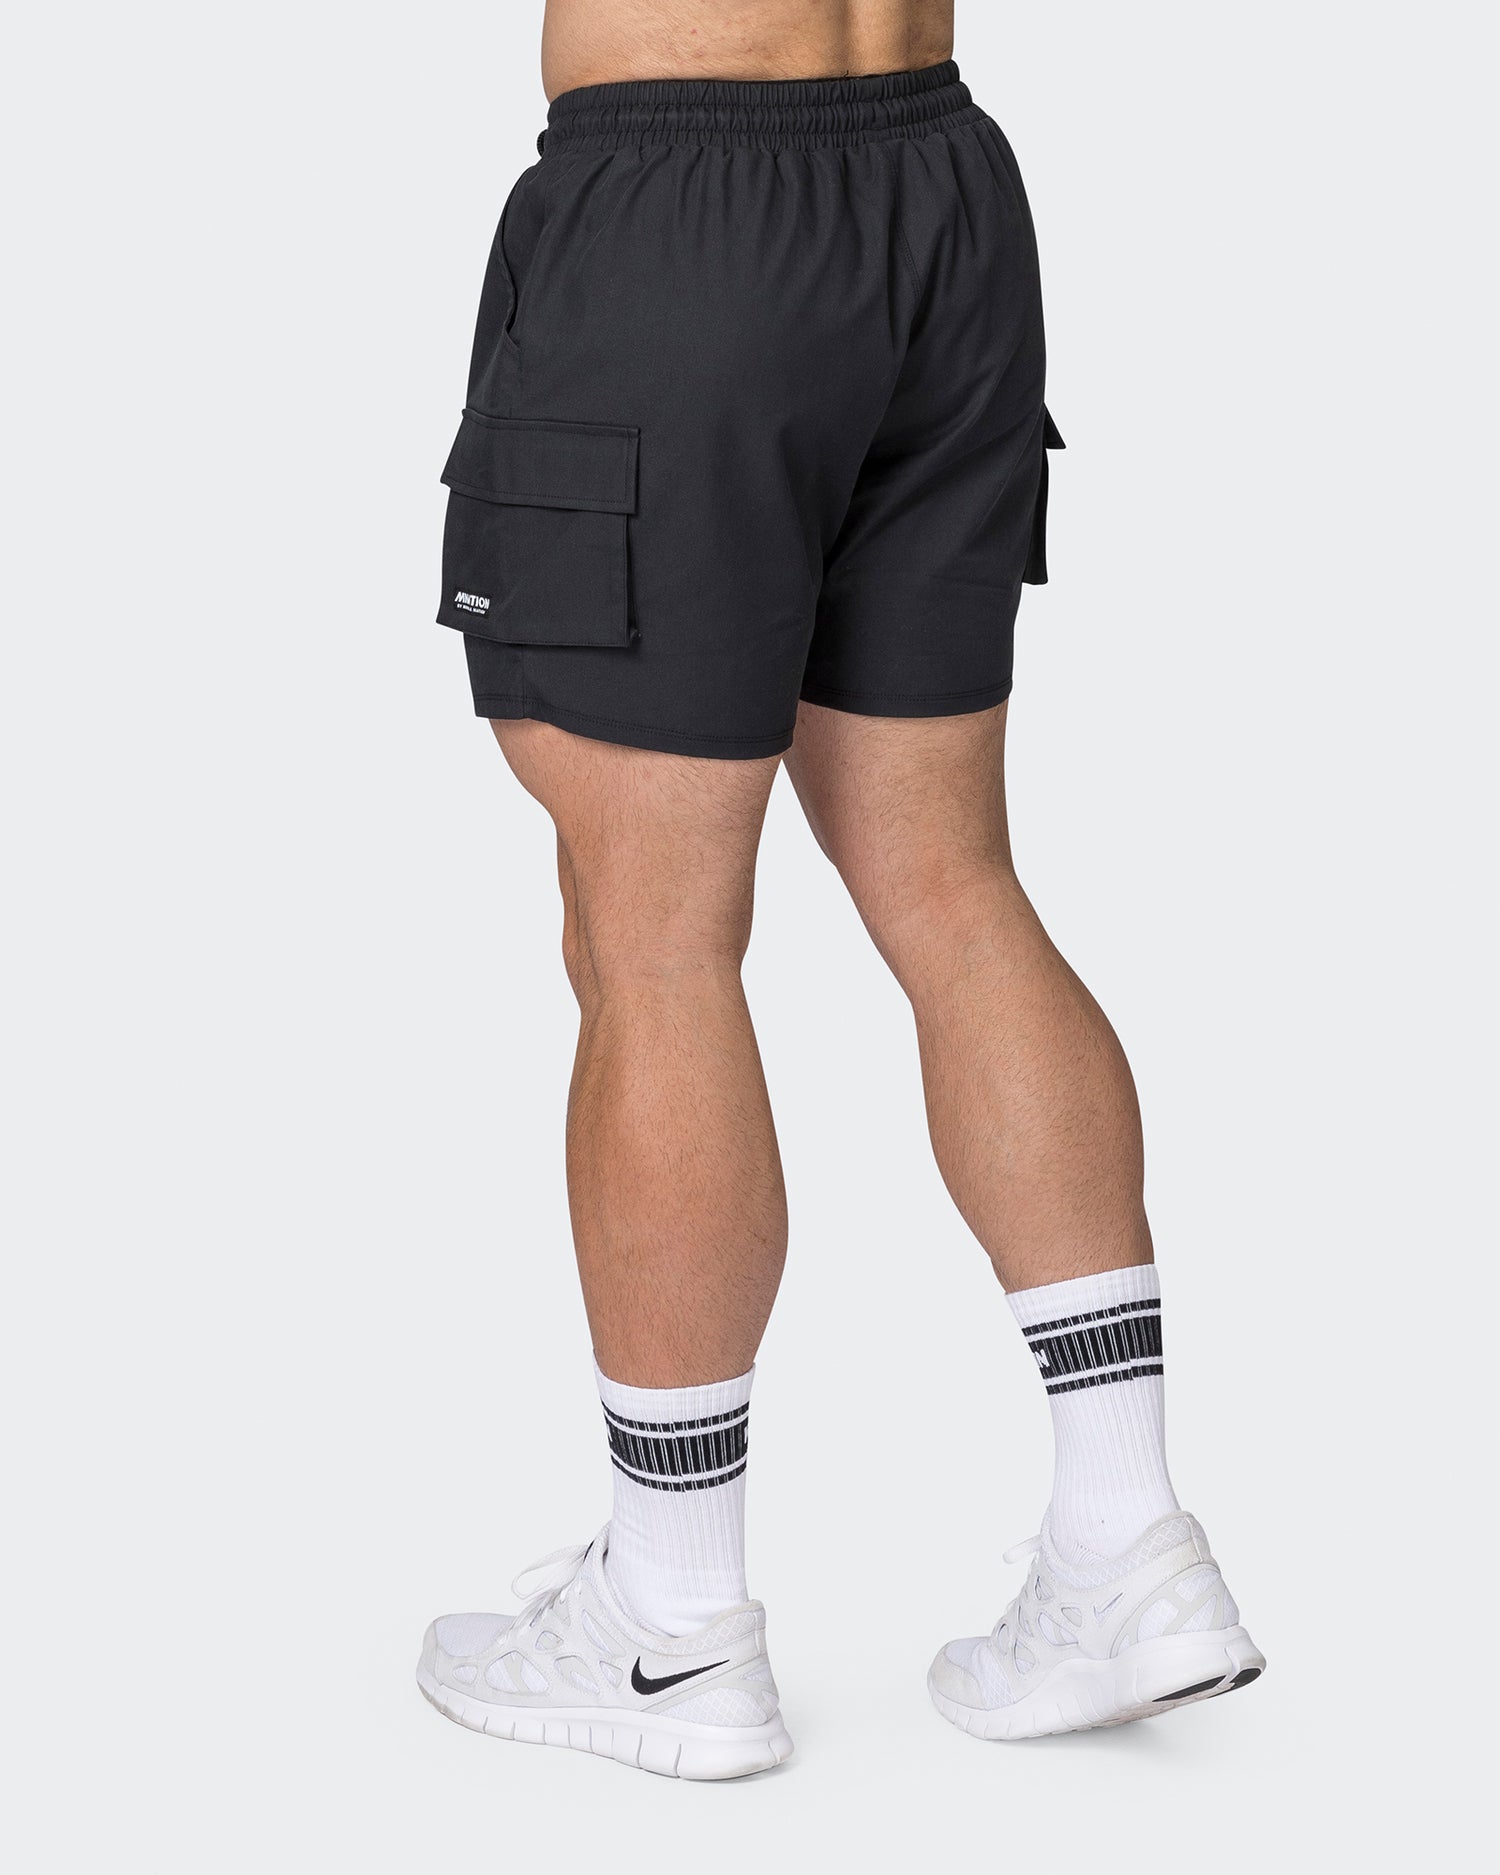 Daily Cargo 5" Shorts - Black